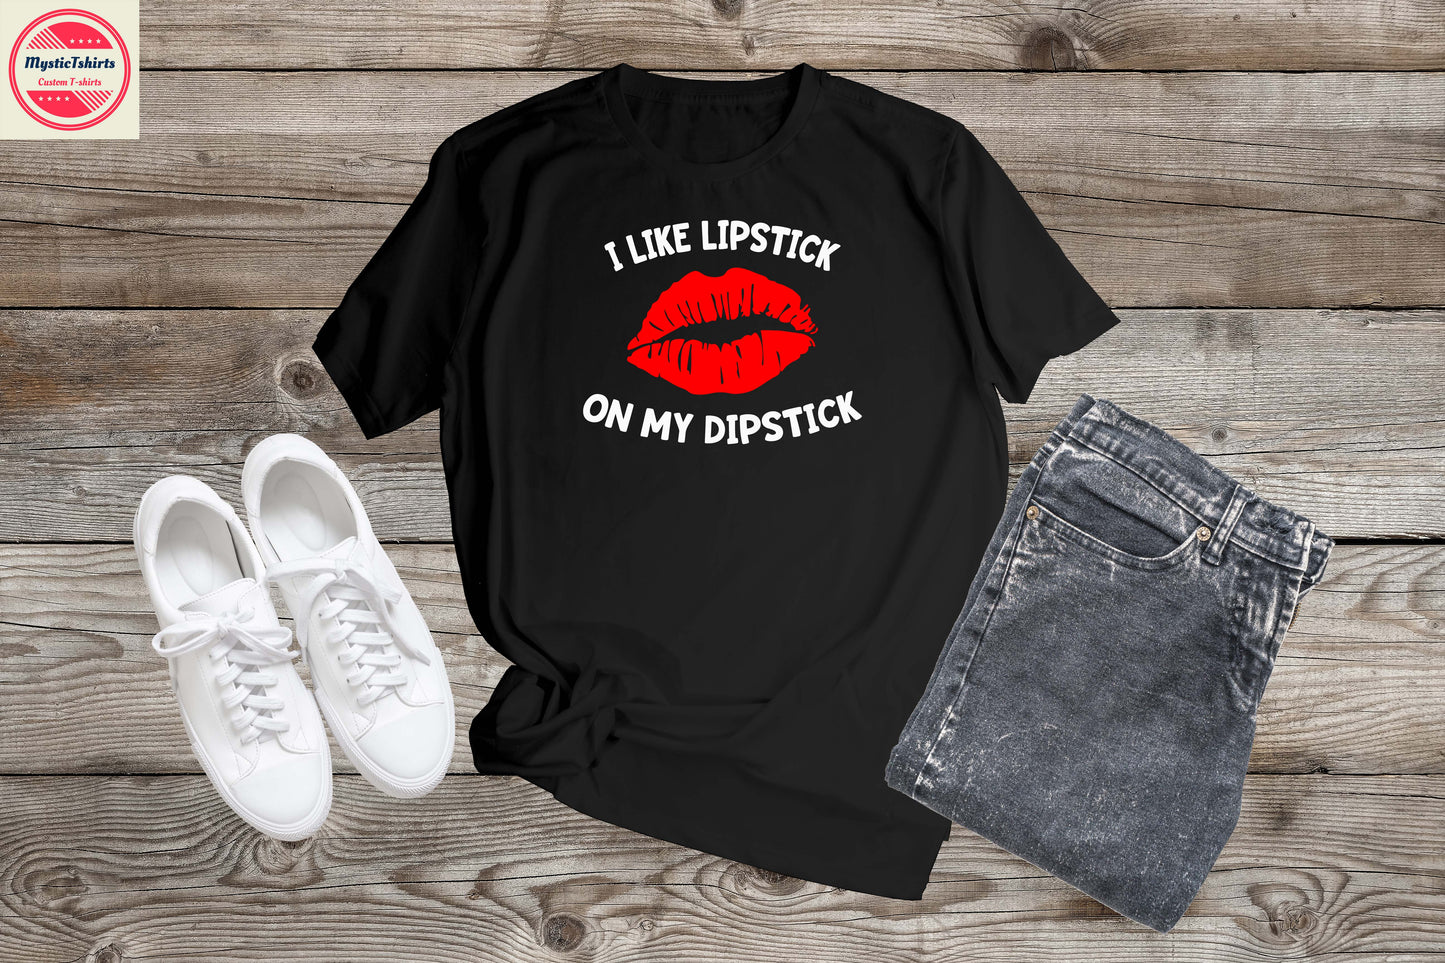 214. I LIKE LIPSTICK ON MY DIPSTICK, Personalized T-Shirt, Custom Text, Make Your Own Shirt, Custom Tee